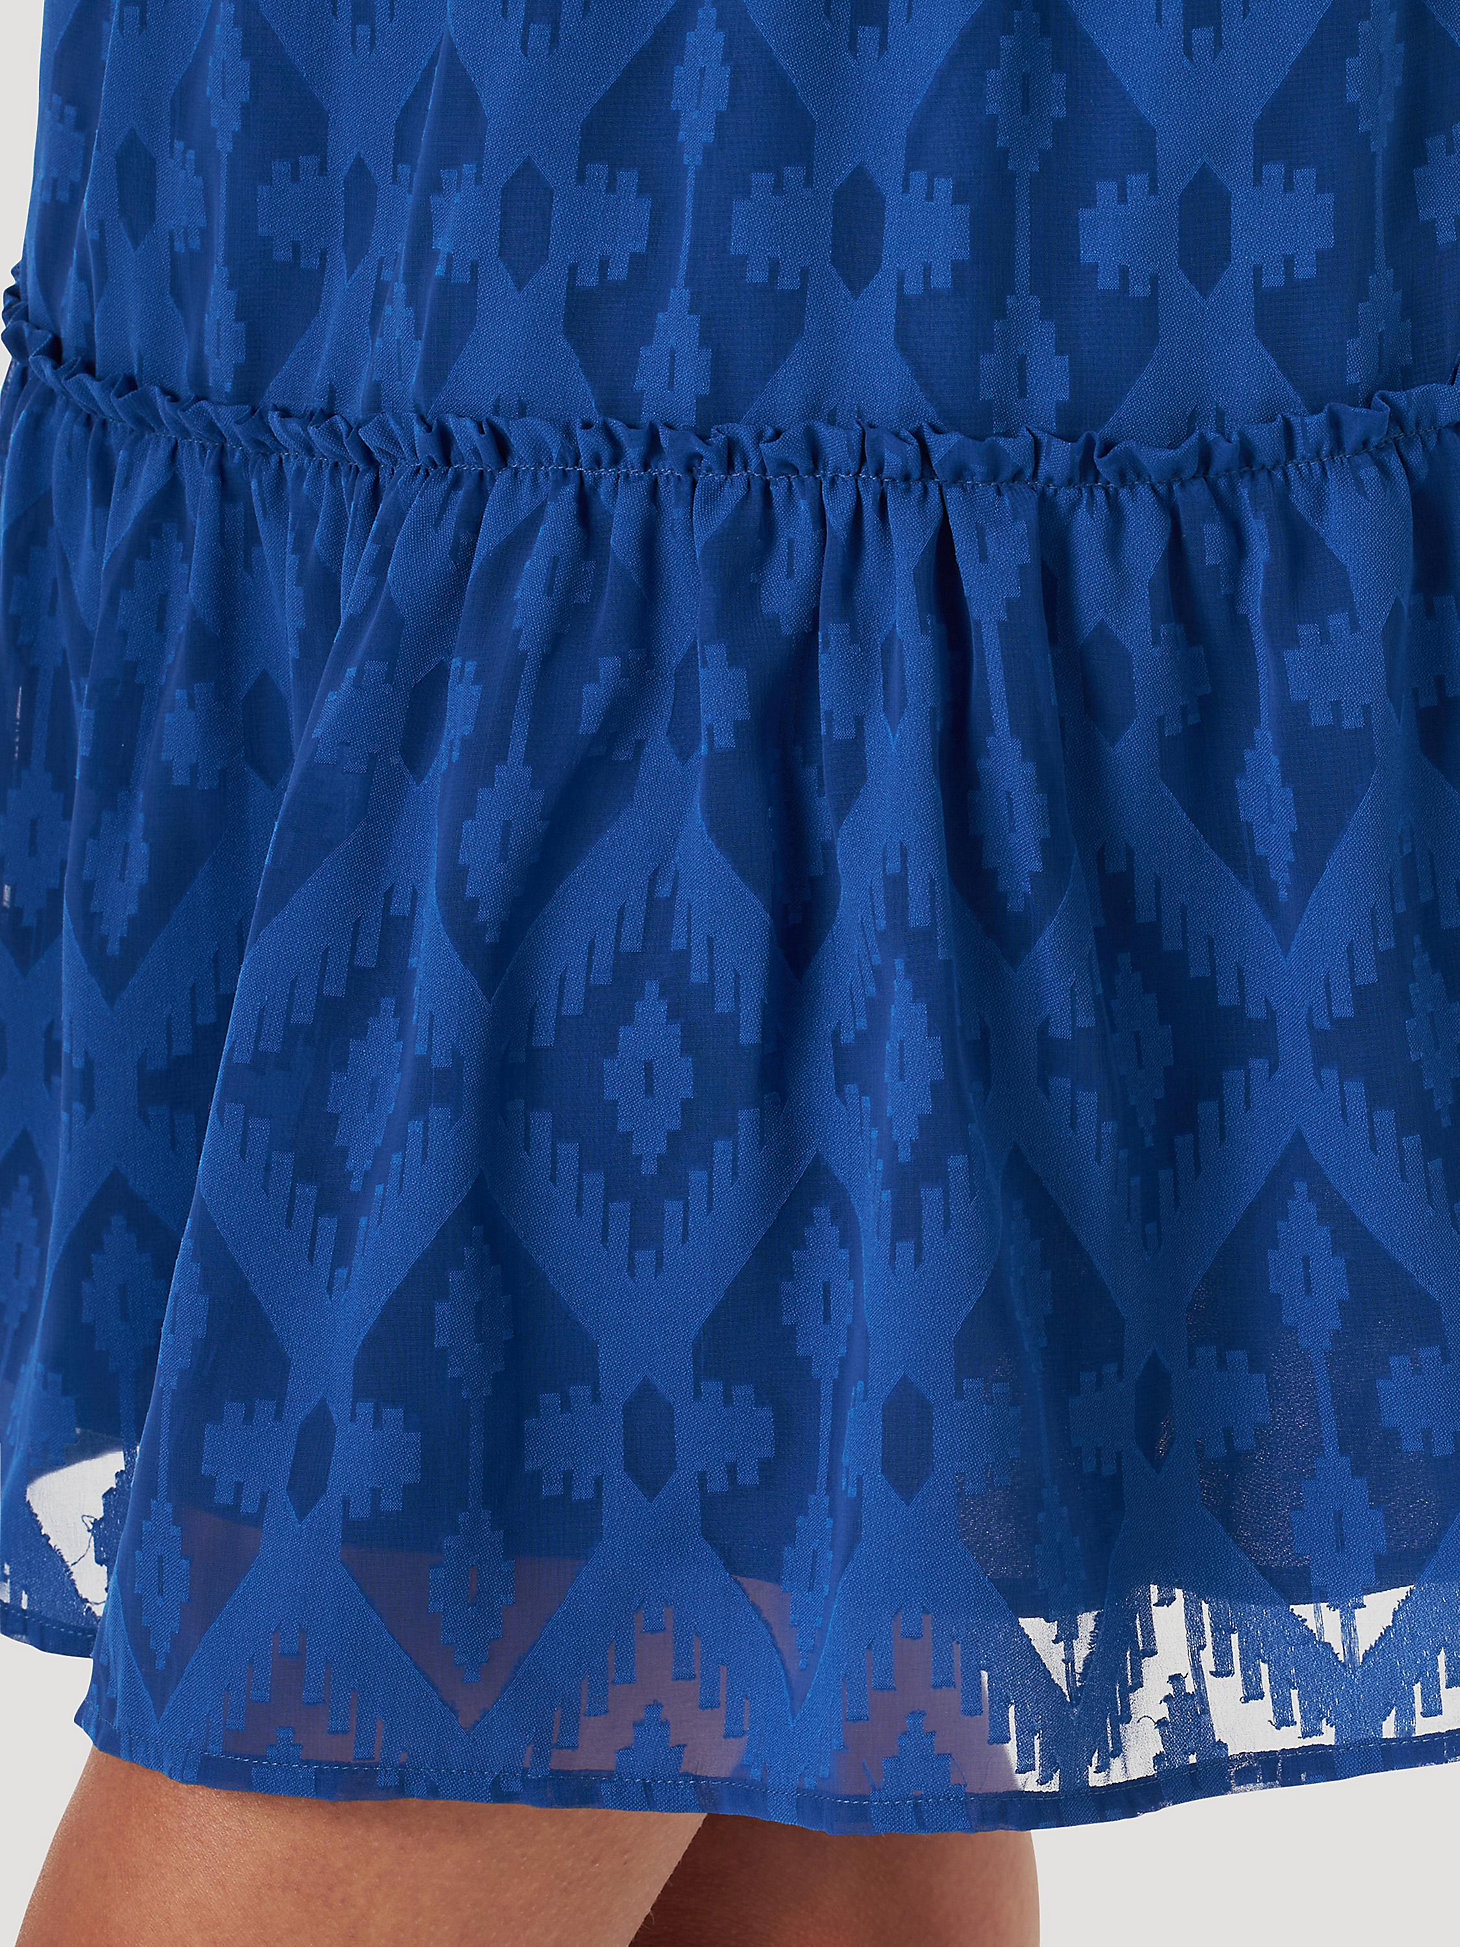 Women's Wrangler Retro® Vintage Tiered Long Sleeve Dress in blue alternative view 3